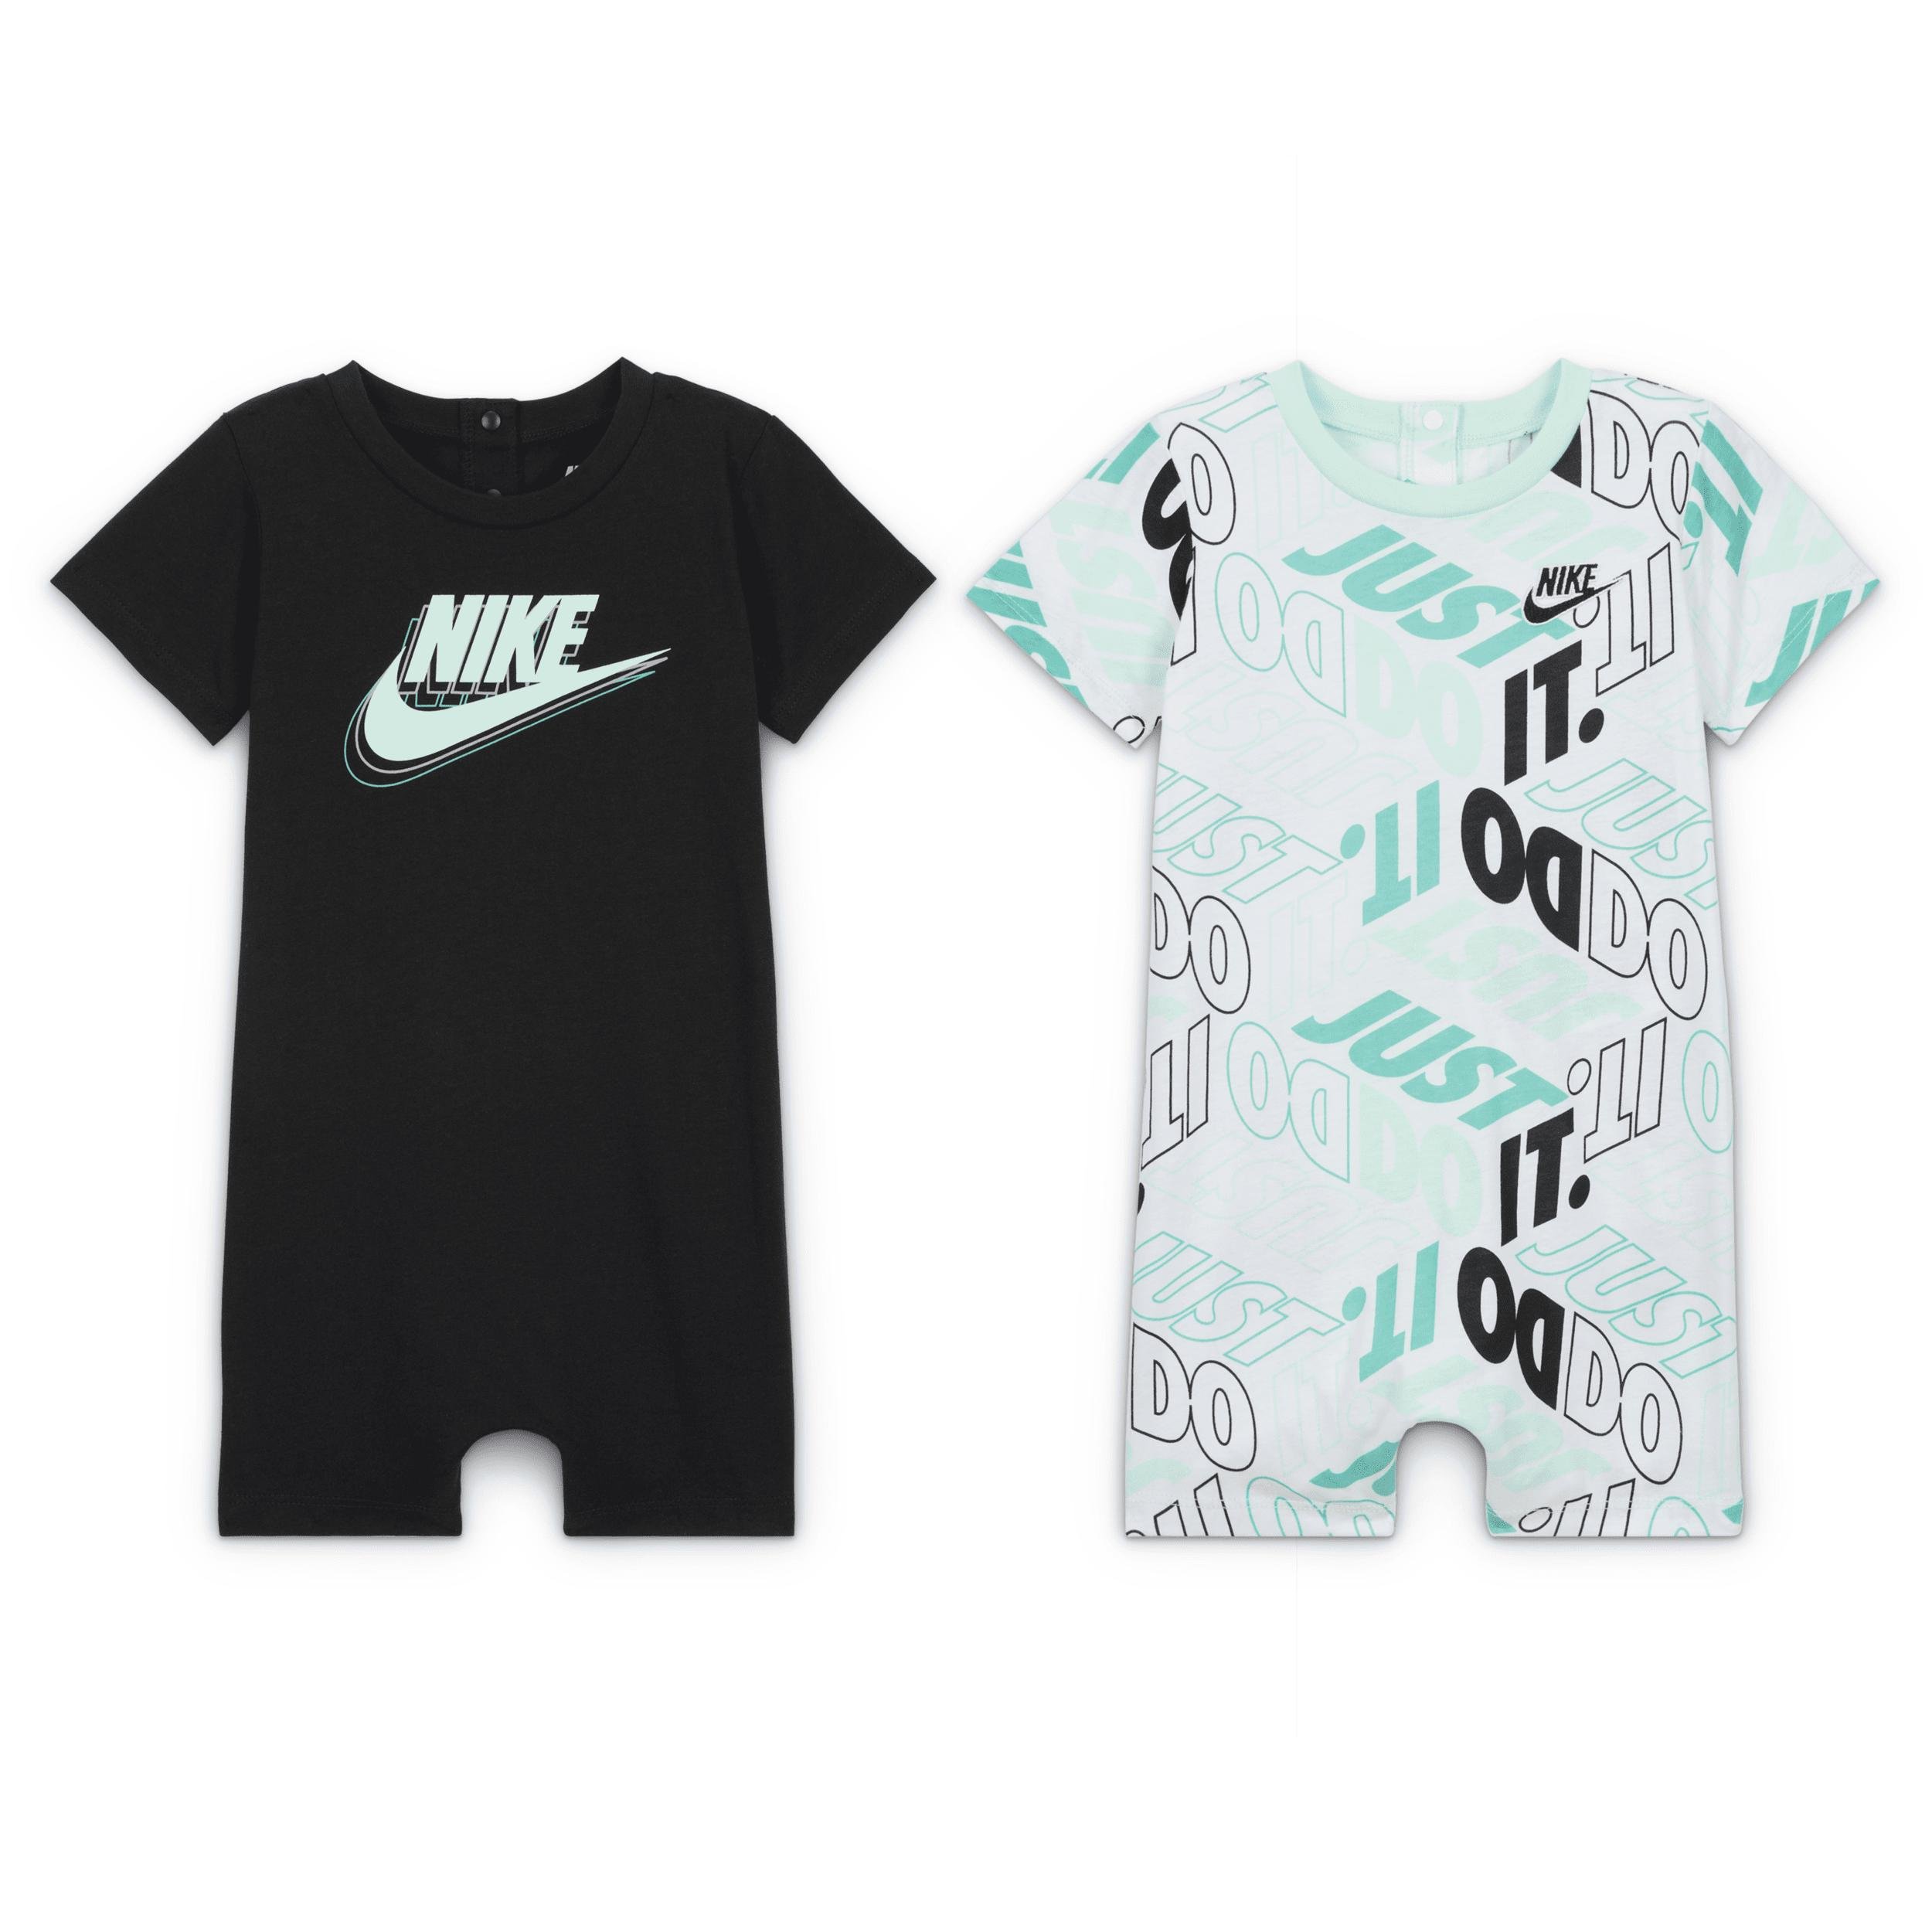 Nike Sportswear Baby (12-24M) 2-Pack Rompers by NIKE